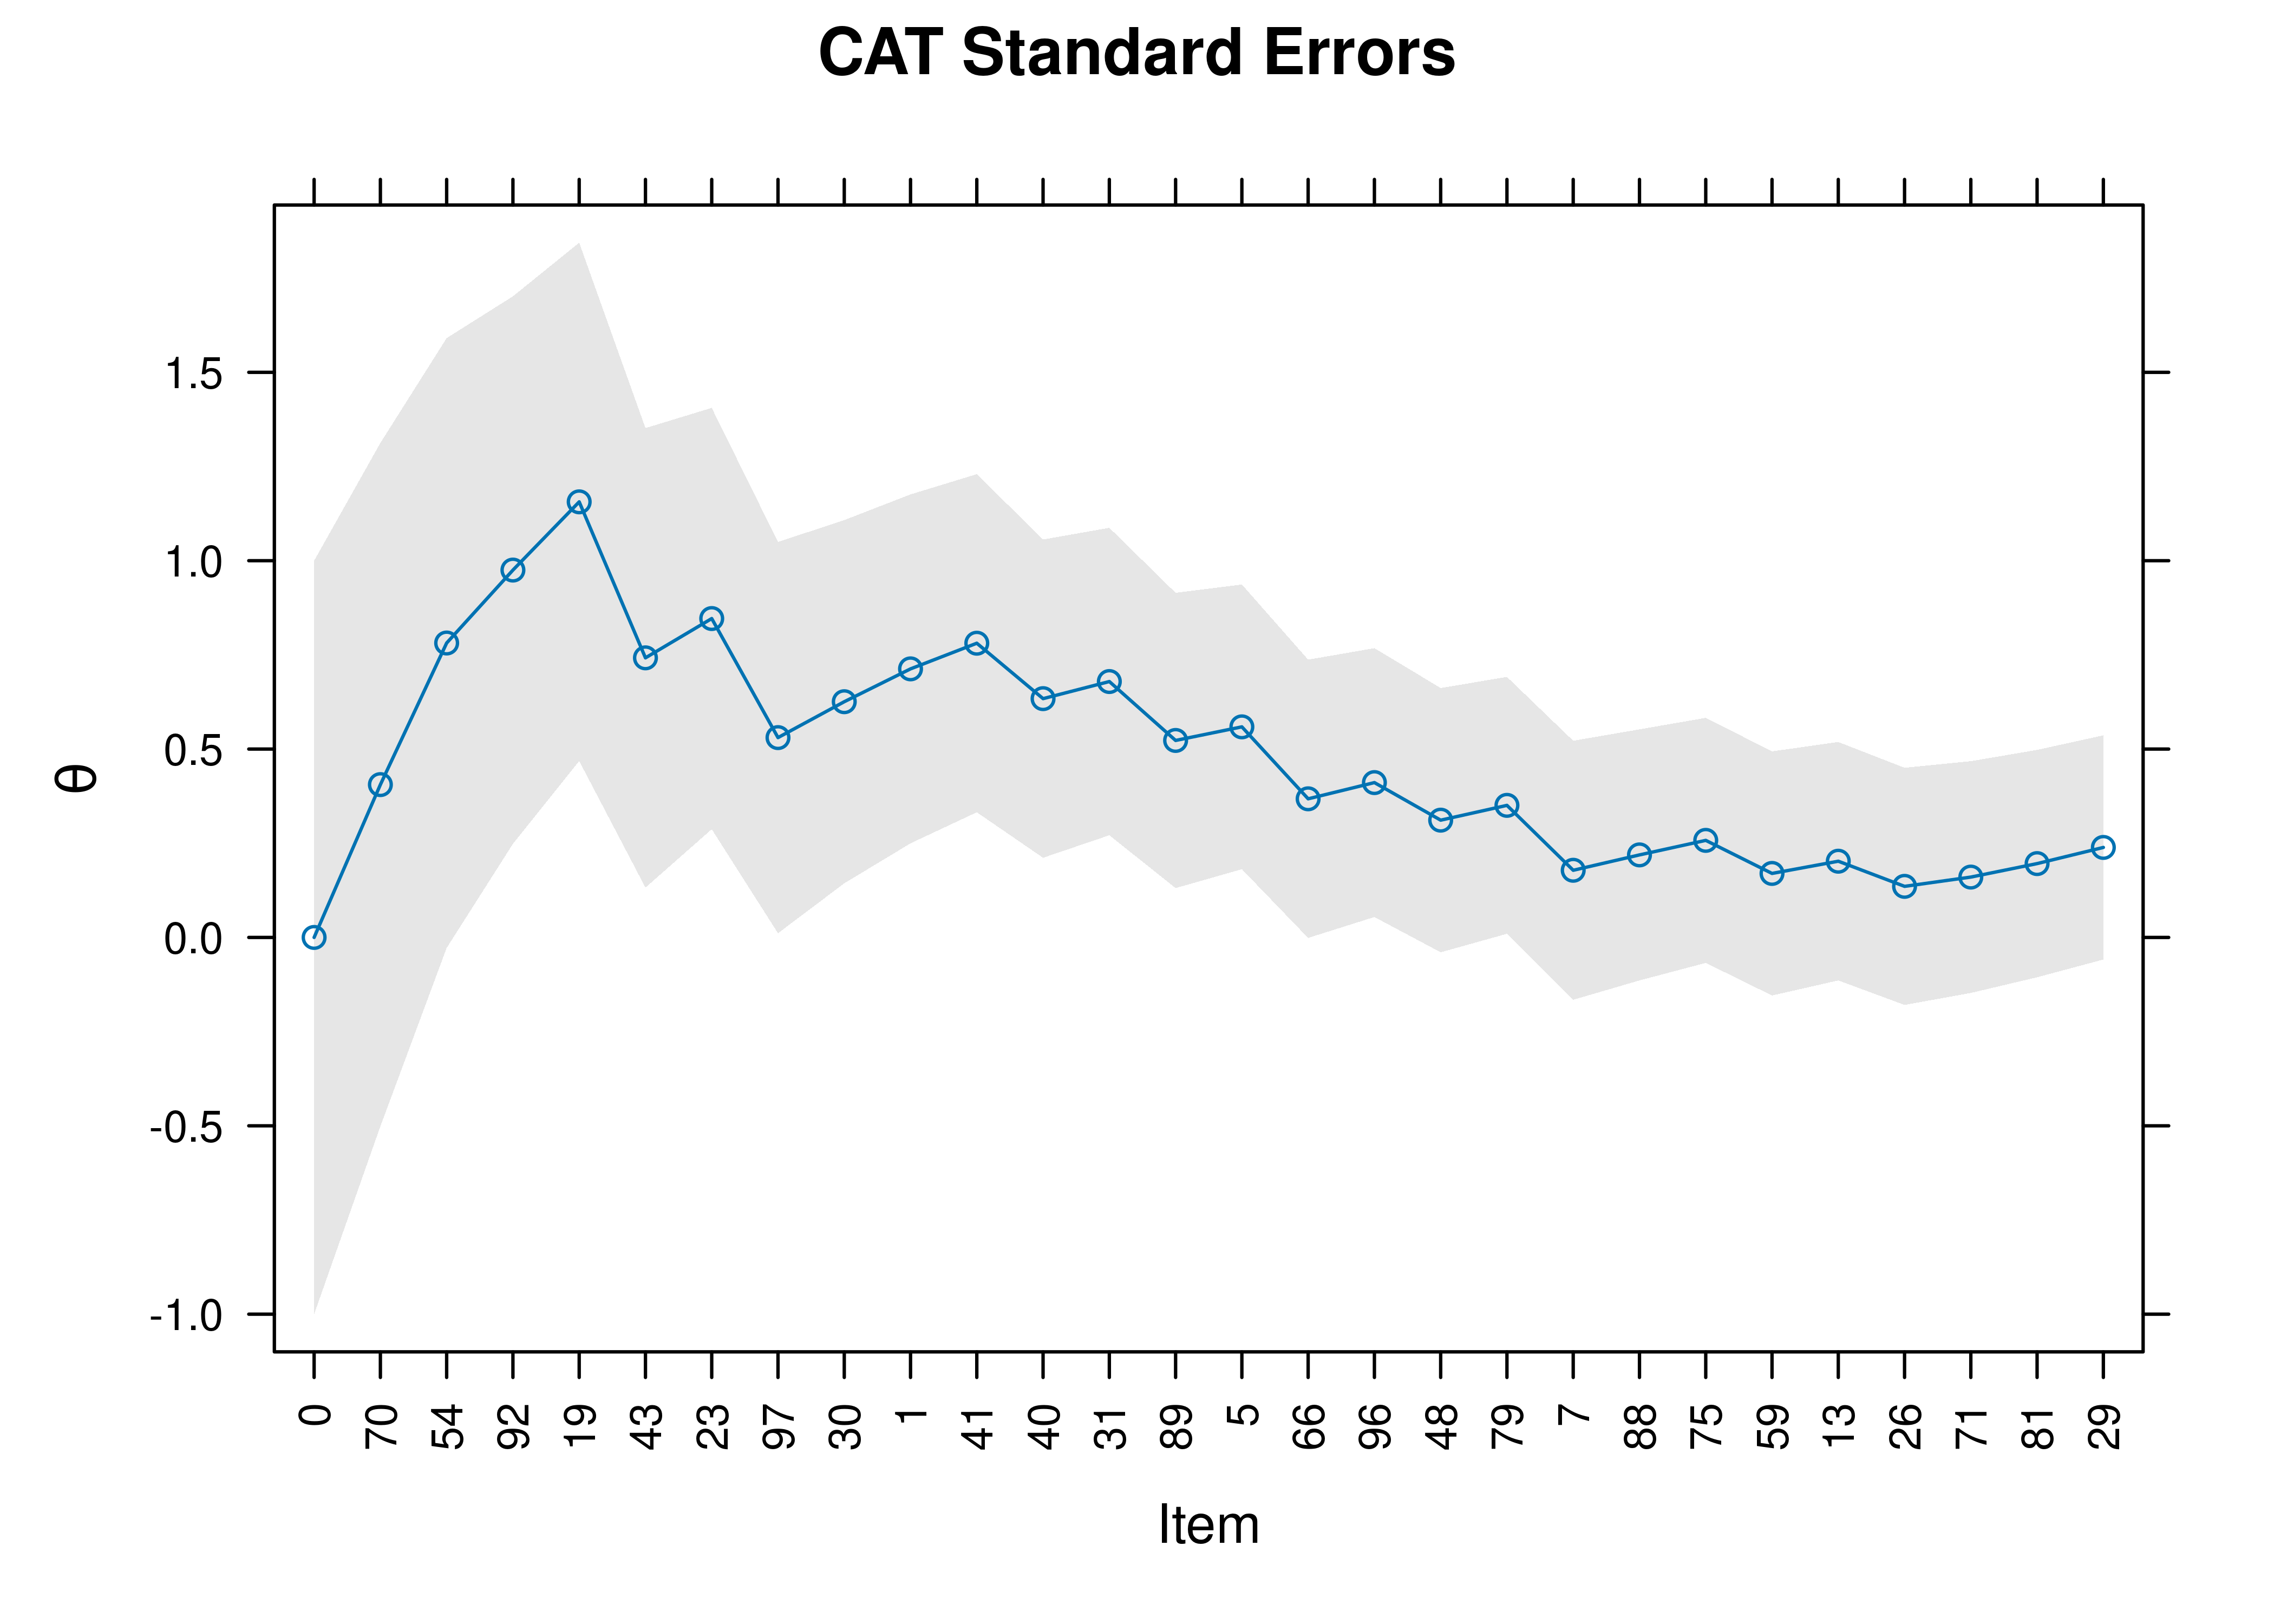 Standard Errors of Measurement Around Theta in a Computerized Adaptive Test.